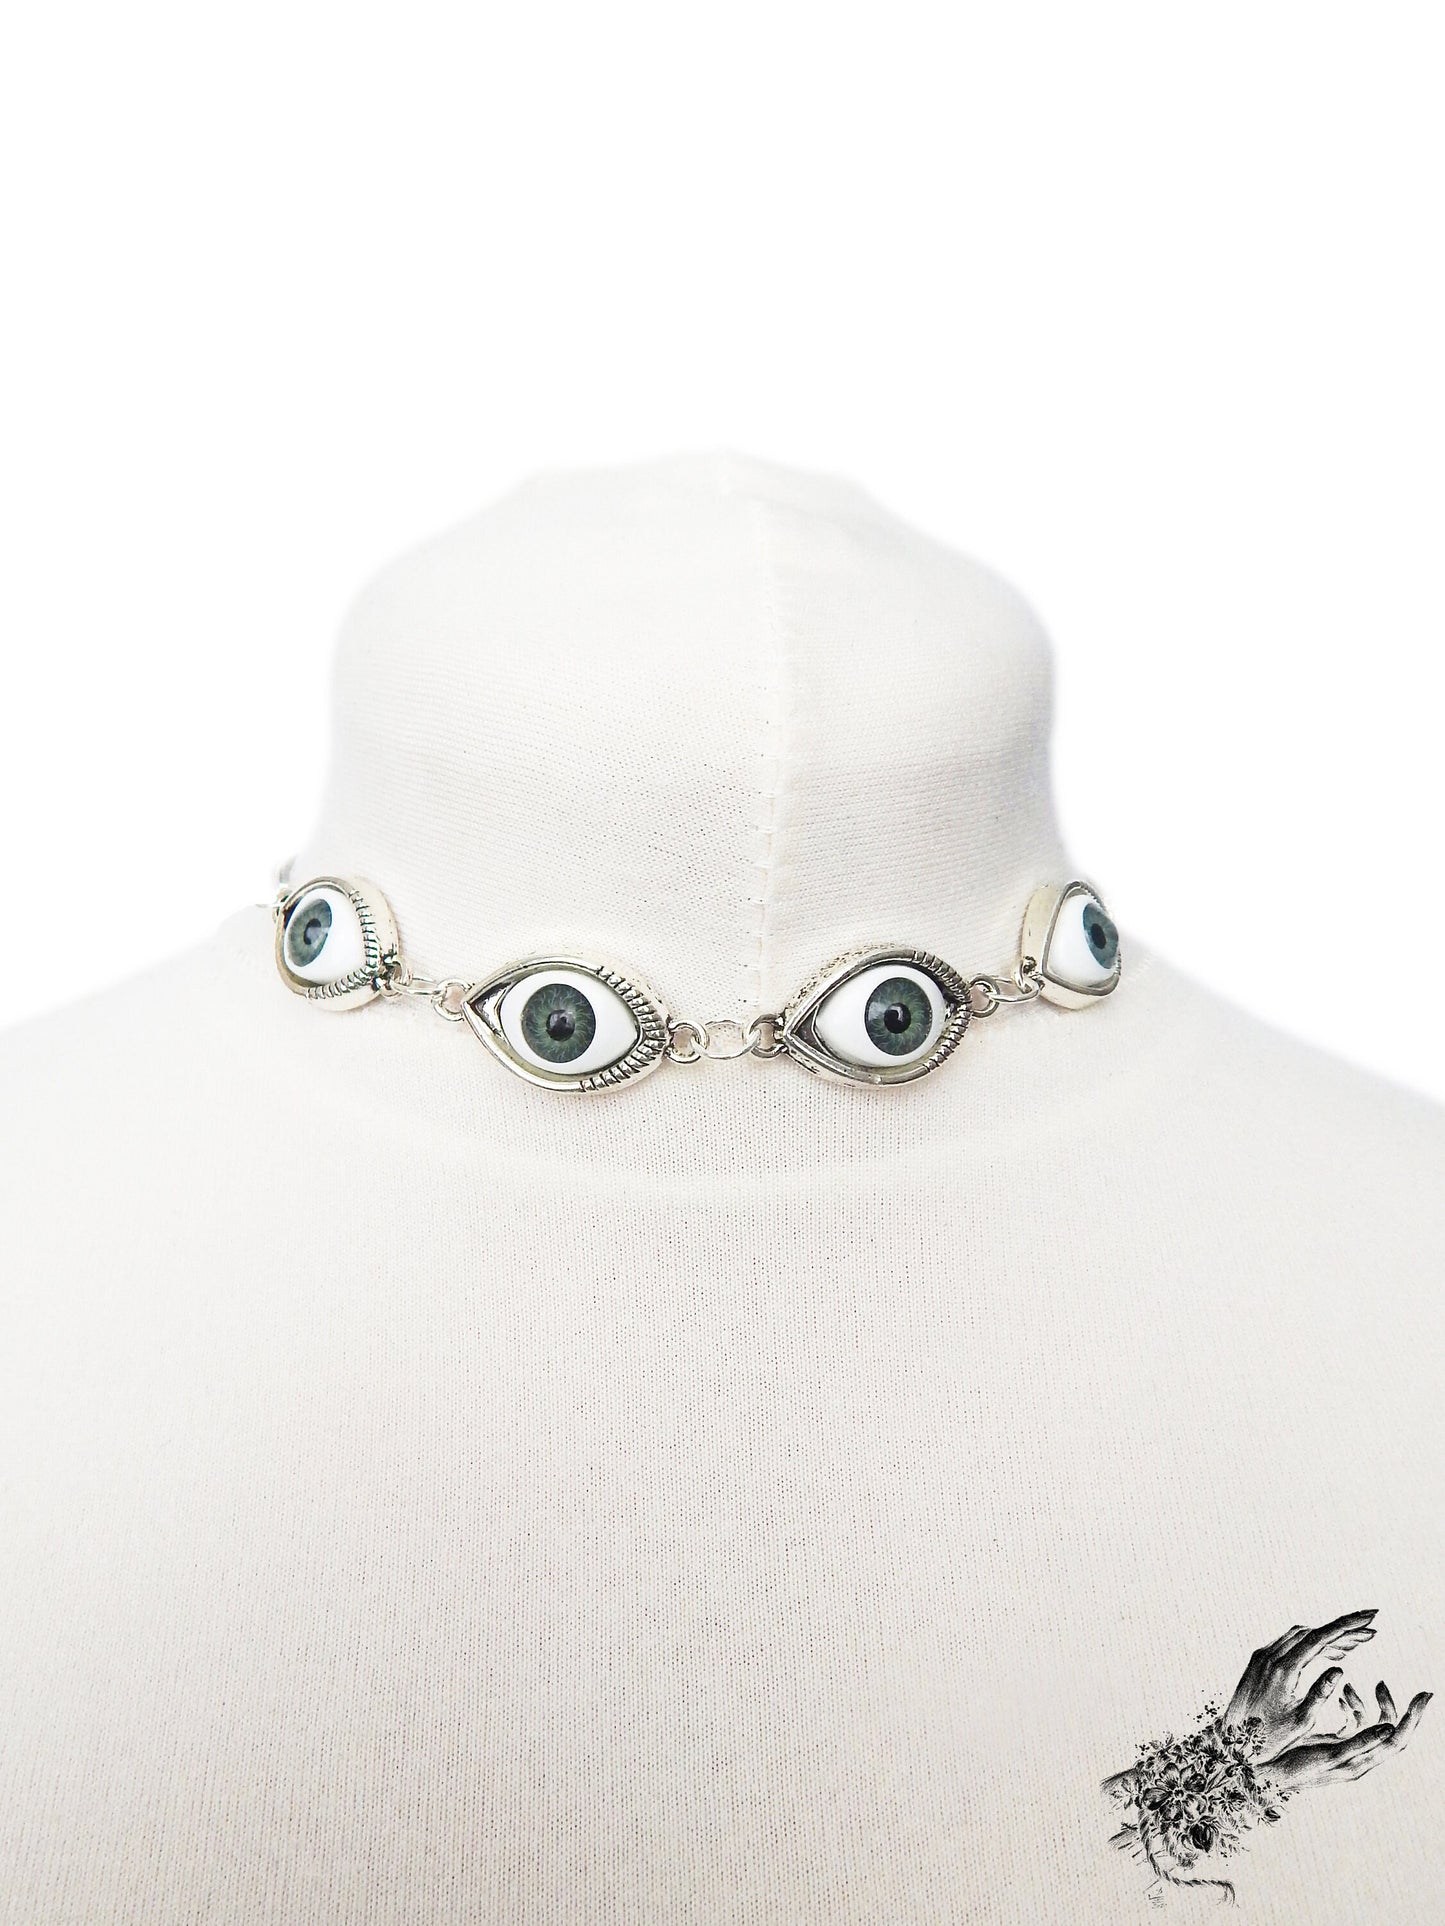 Antique Silver Evil Eye Choker Necklace